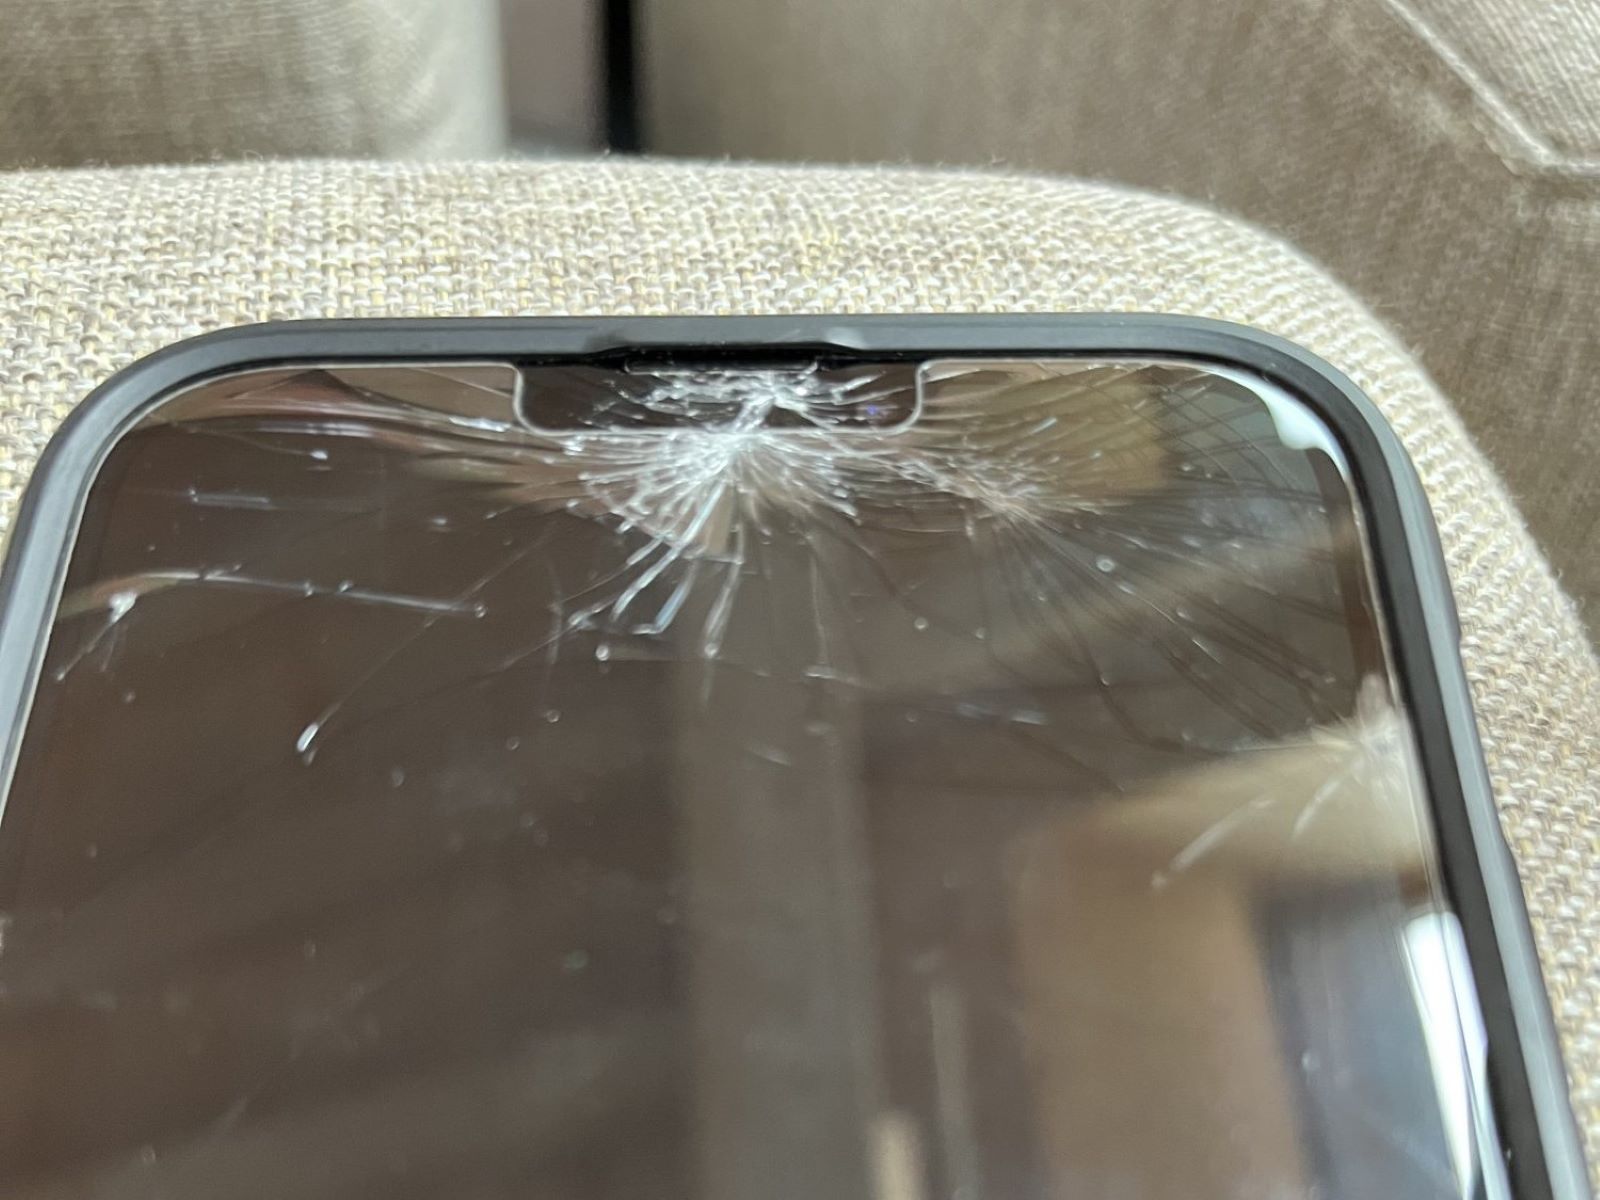 Cracked Screen Fix: Addressing Damage On IPhone 10